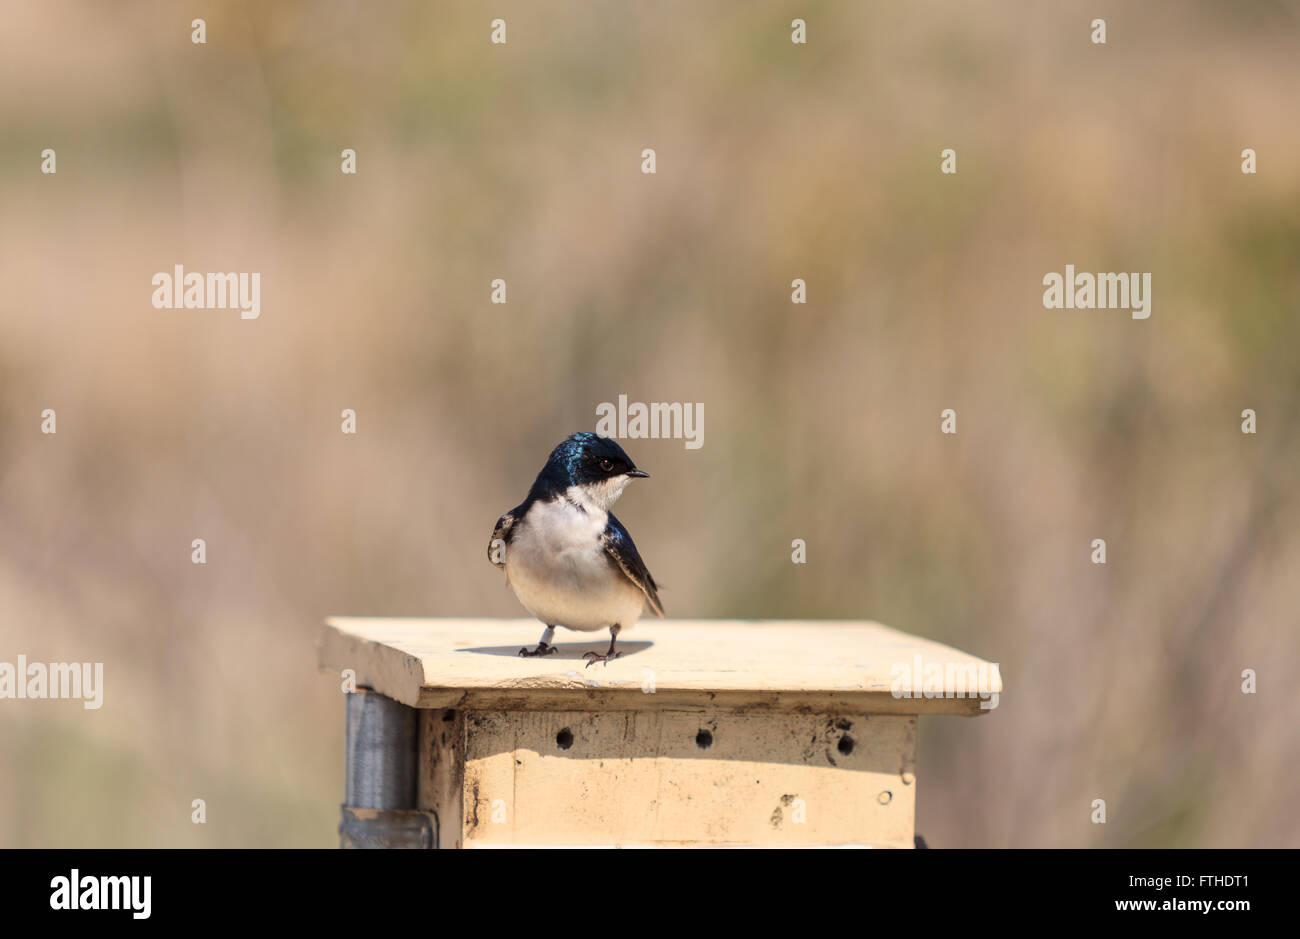 Blue Tree swallow bird, Tachycineta bicolor, sits on a nesting box in San Joaquin wildlife sanctuary, Southern California, Unite Stock Photo